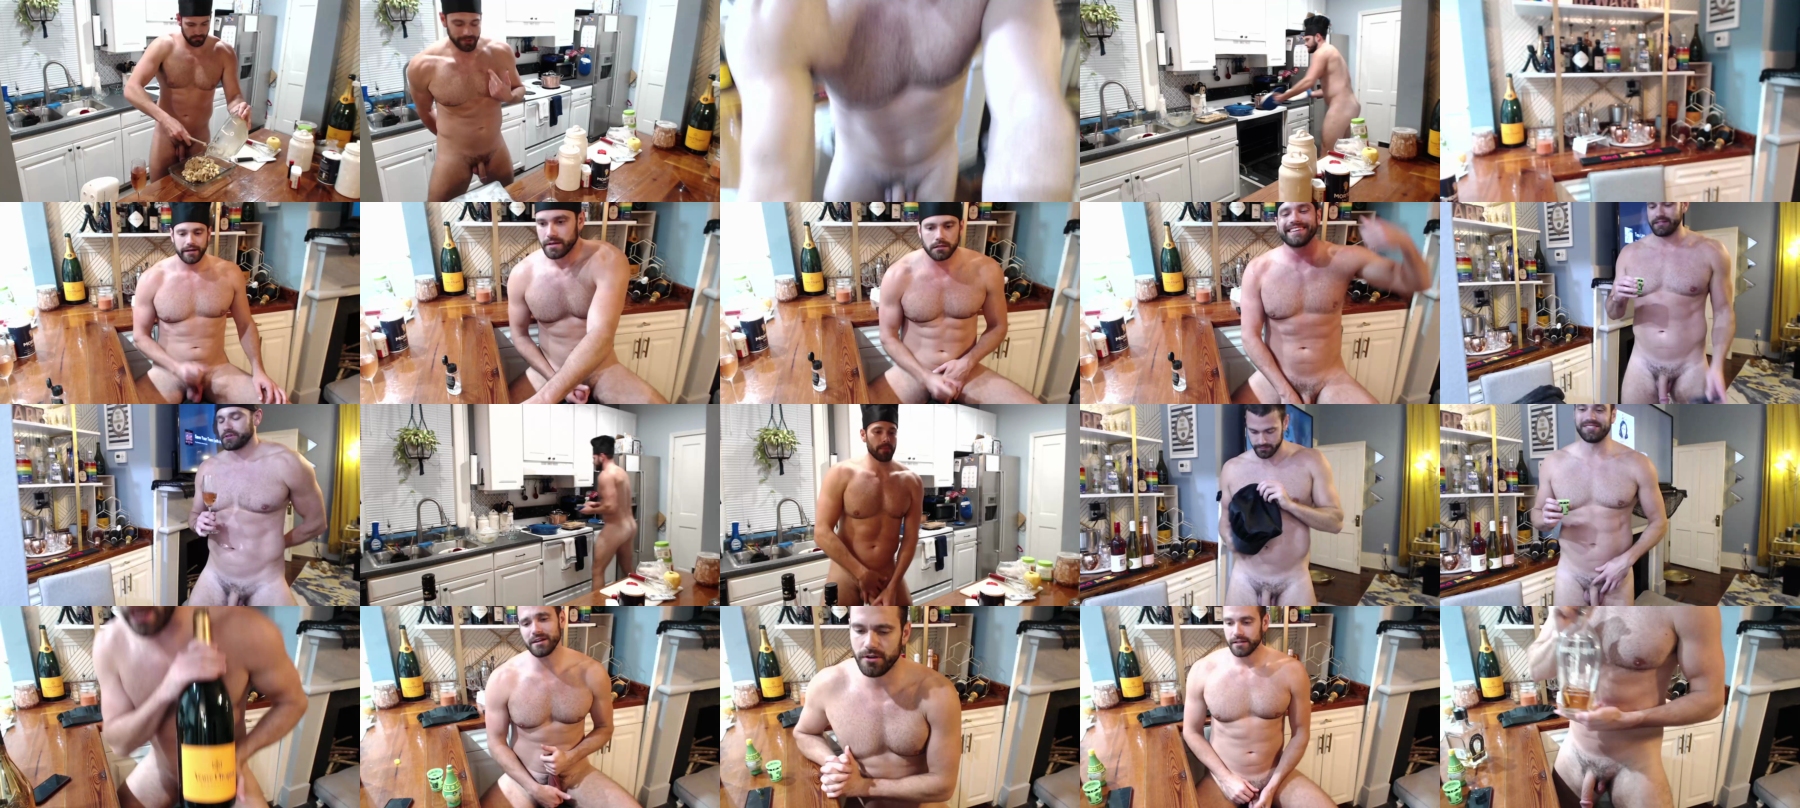 Chasemason20  08-10-2021 Male Webcam